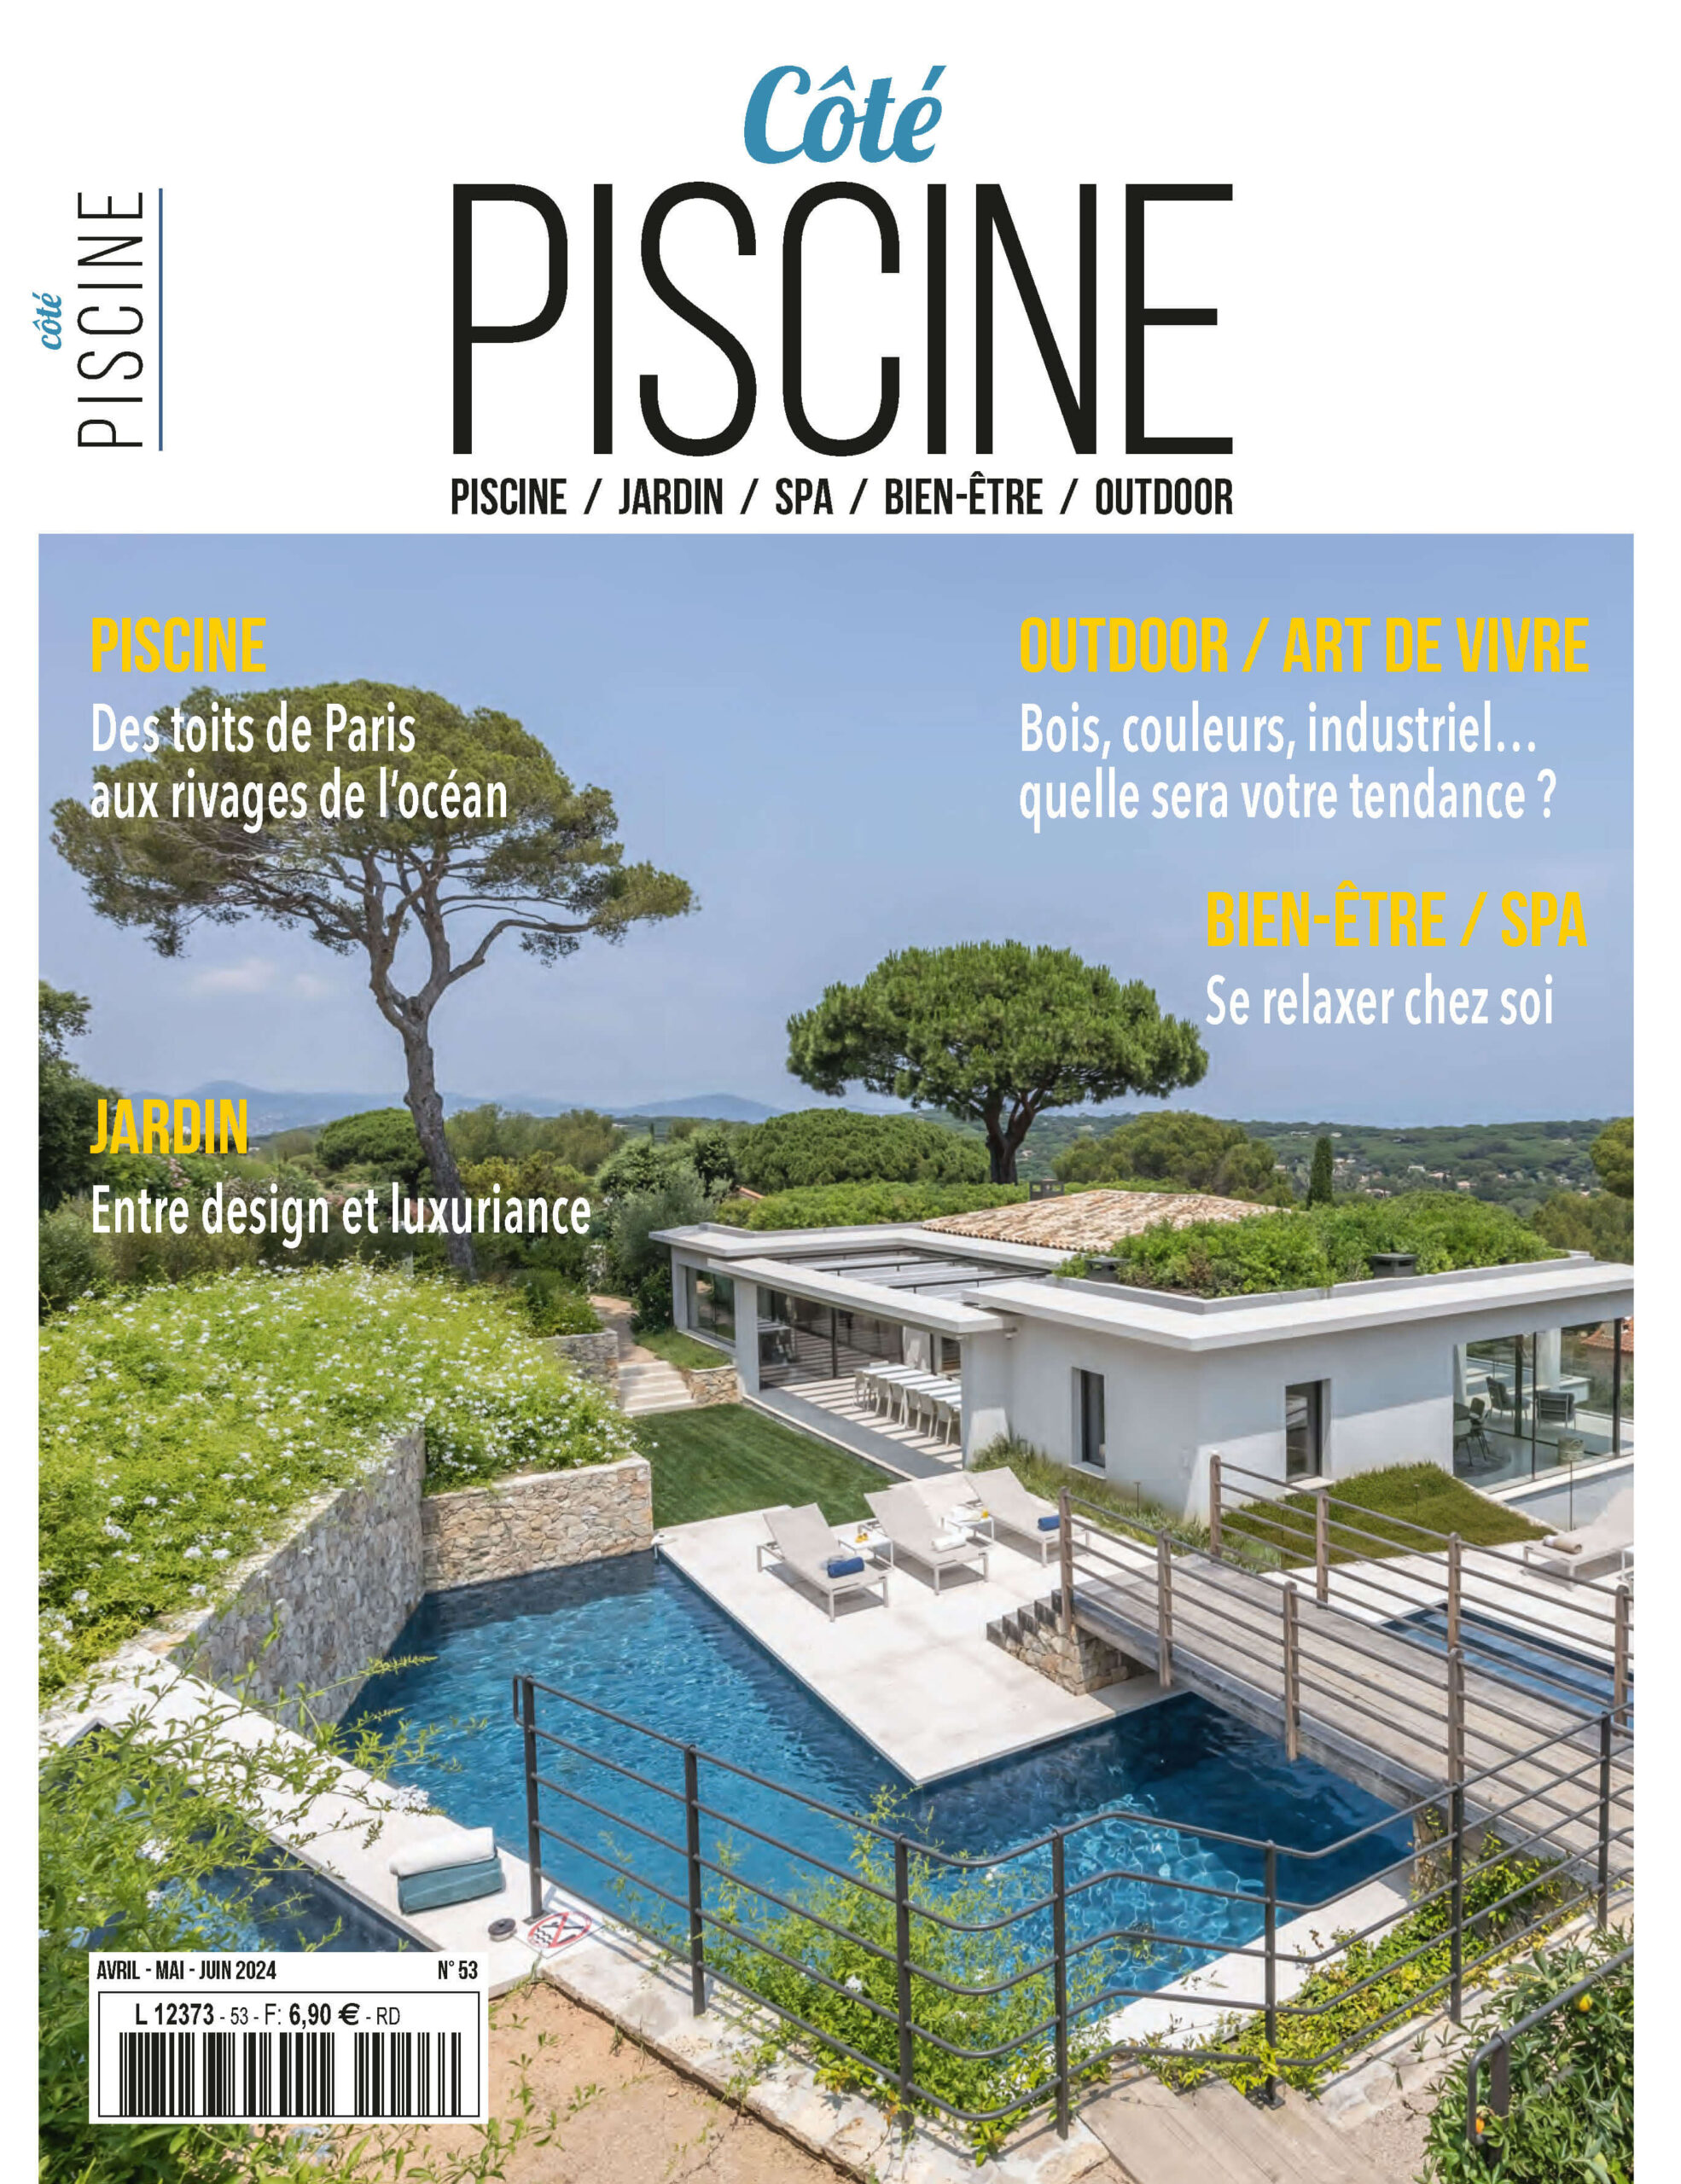 hydramat-cote-piscine-magazine-mini-piscine-lorient-vannes-saint-brieuc